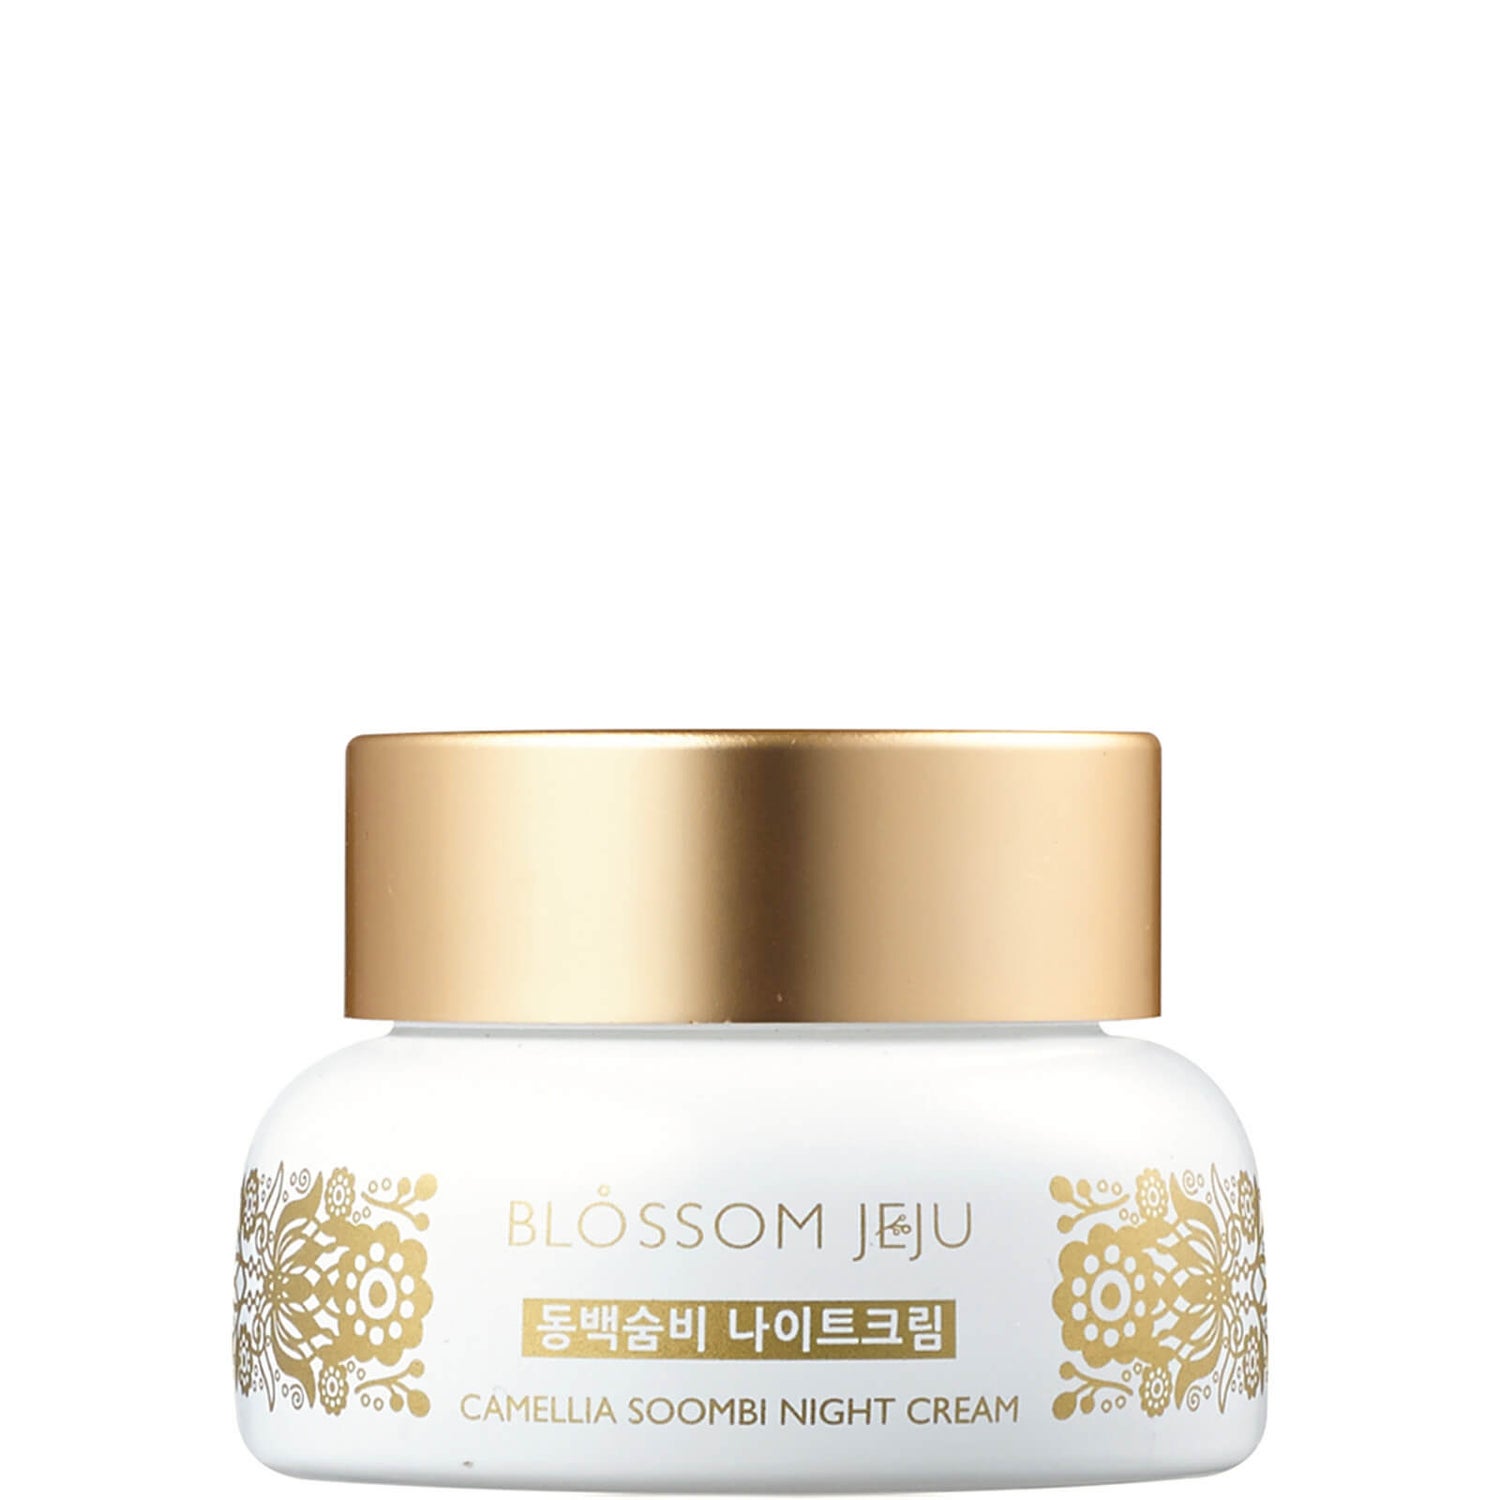 Blossom Jeju Camellia Soombi Night Cream